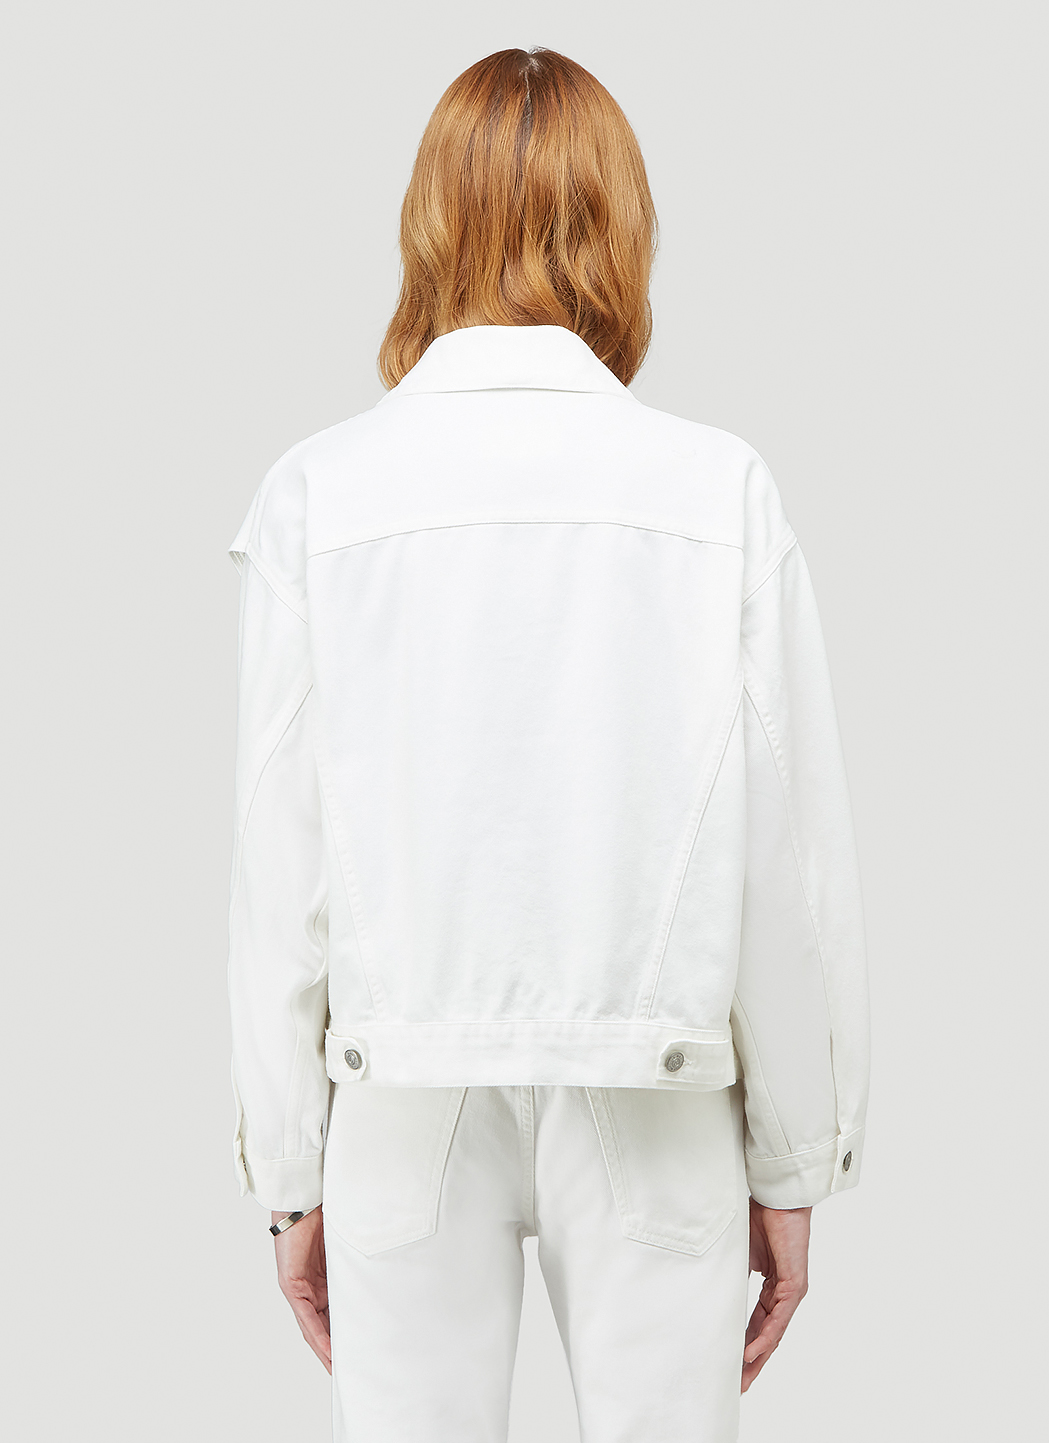 MM6 Maison Margiela Women's Sports Denim Jacket in White | LN-CC